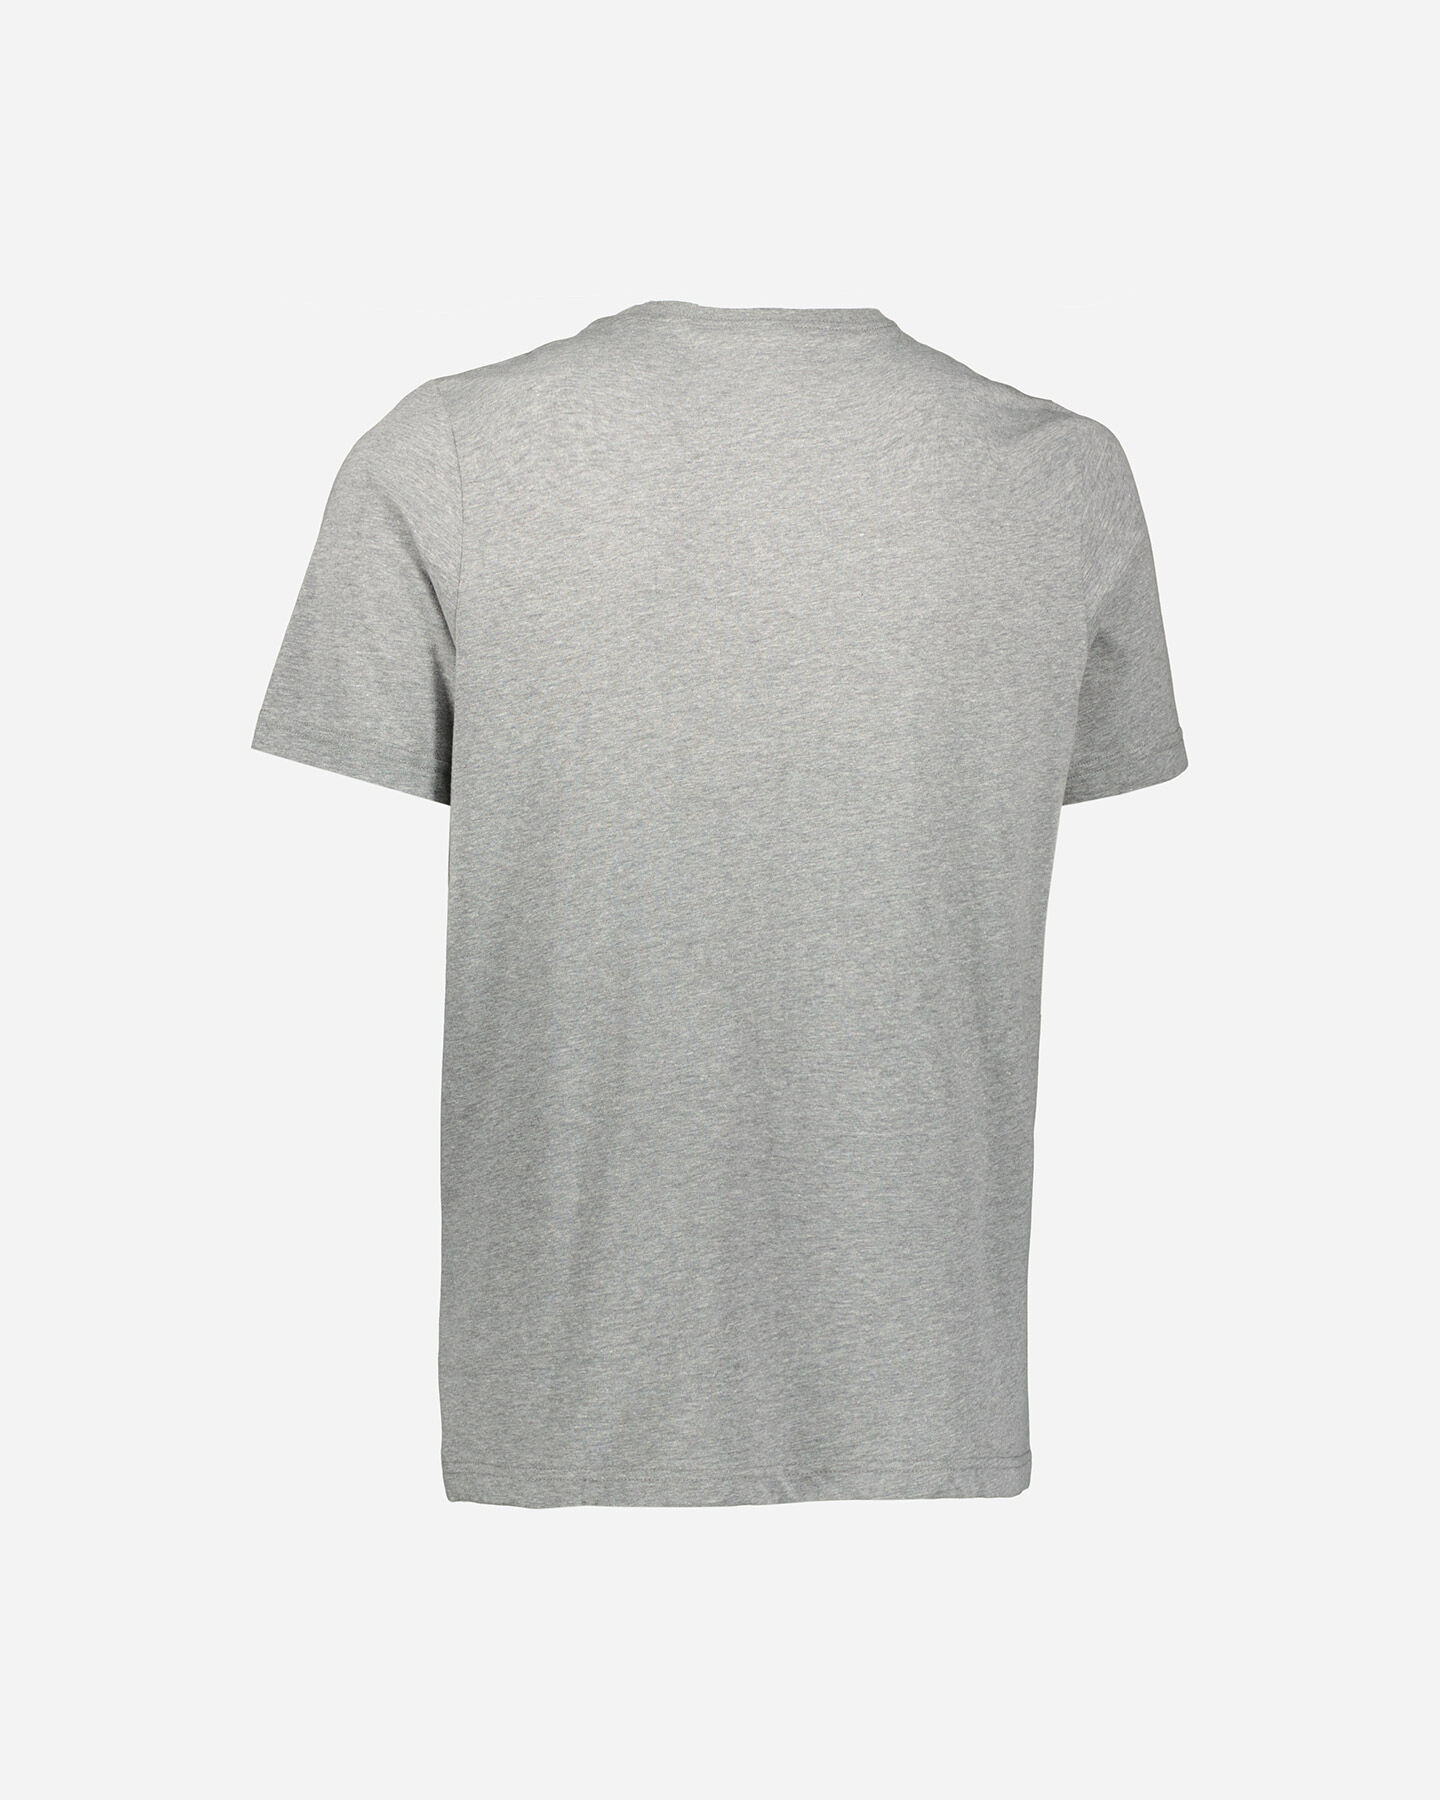  T-Shirt PUMA BLANK M S5365740|01|S scatto 1